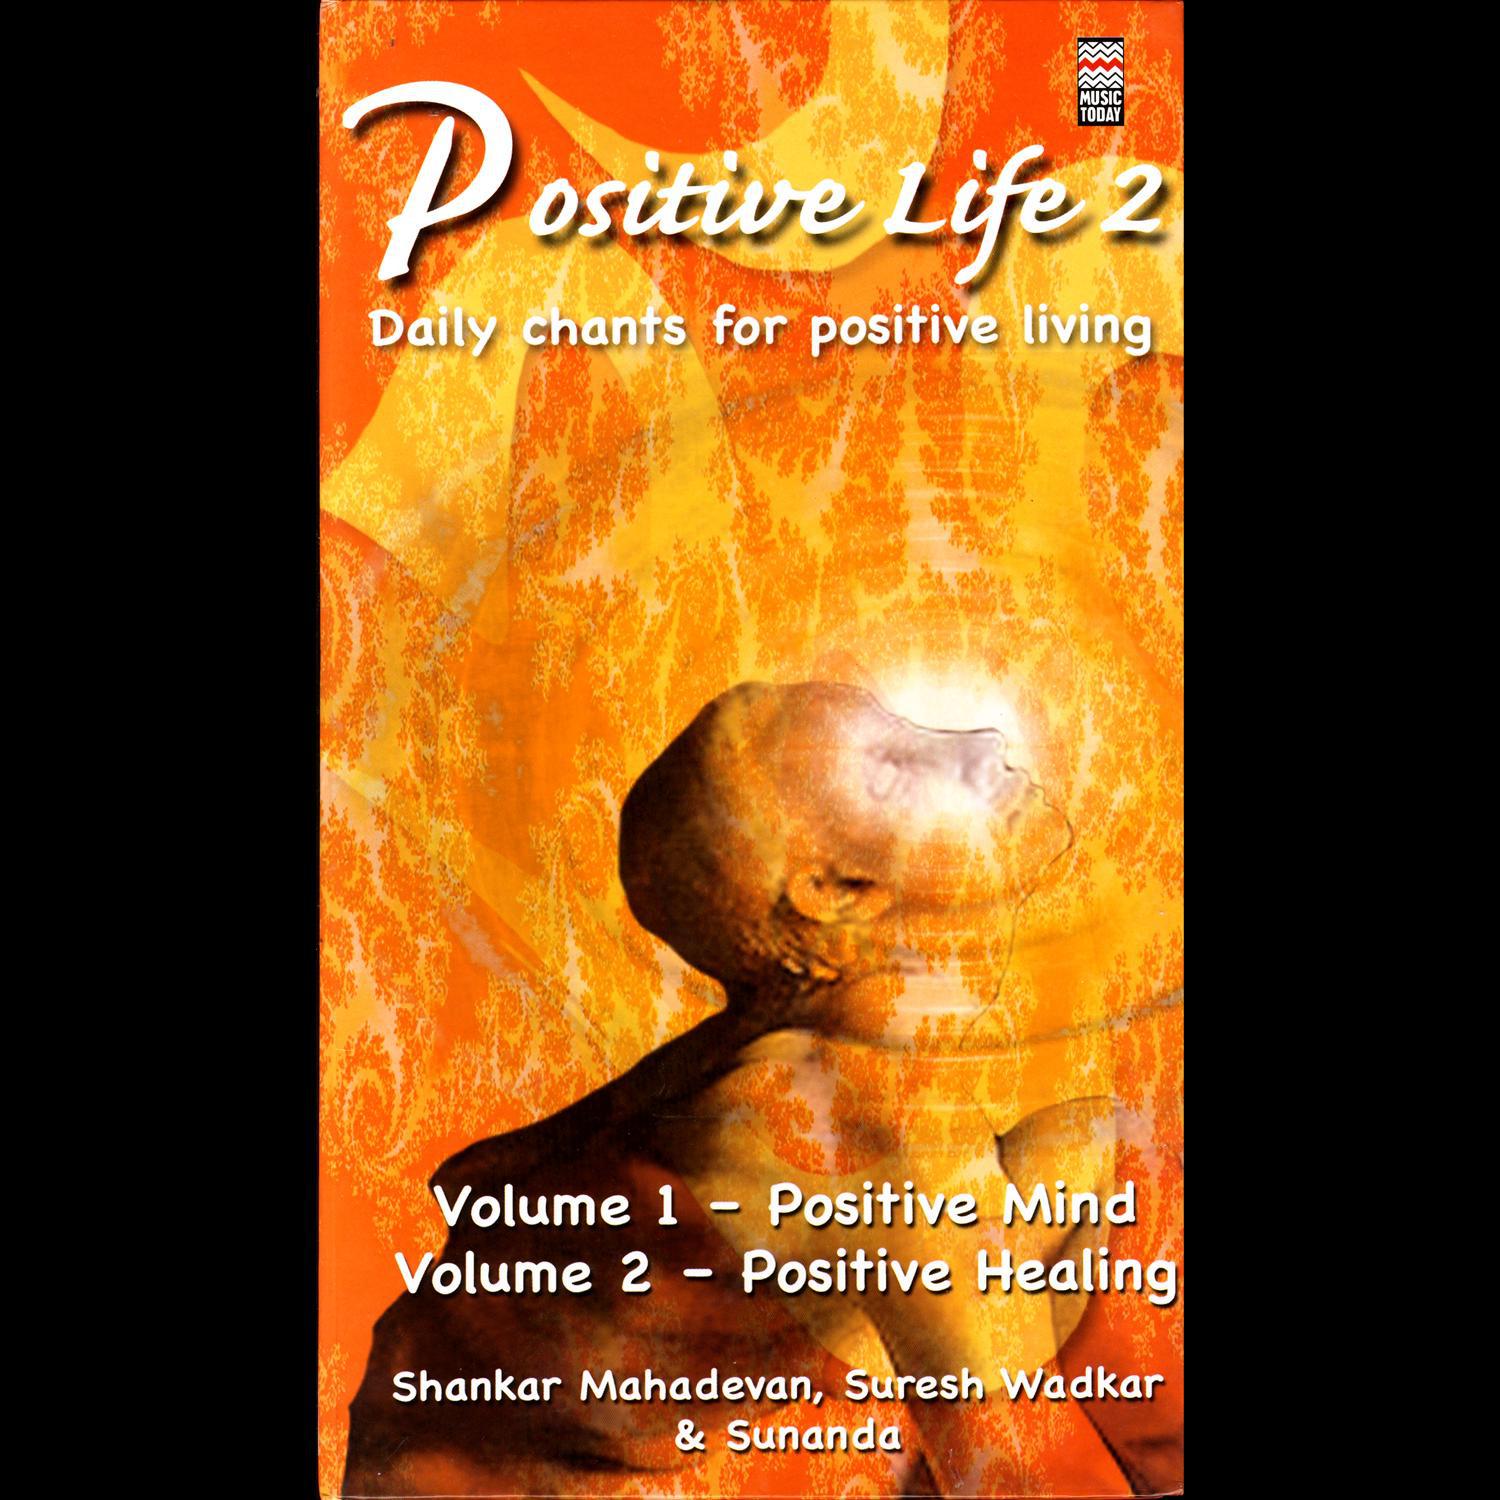 Positive Life 2, Vol. 1 - Positive Mind